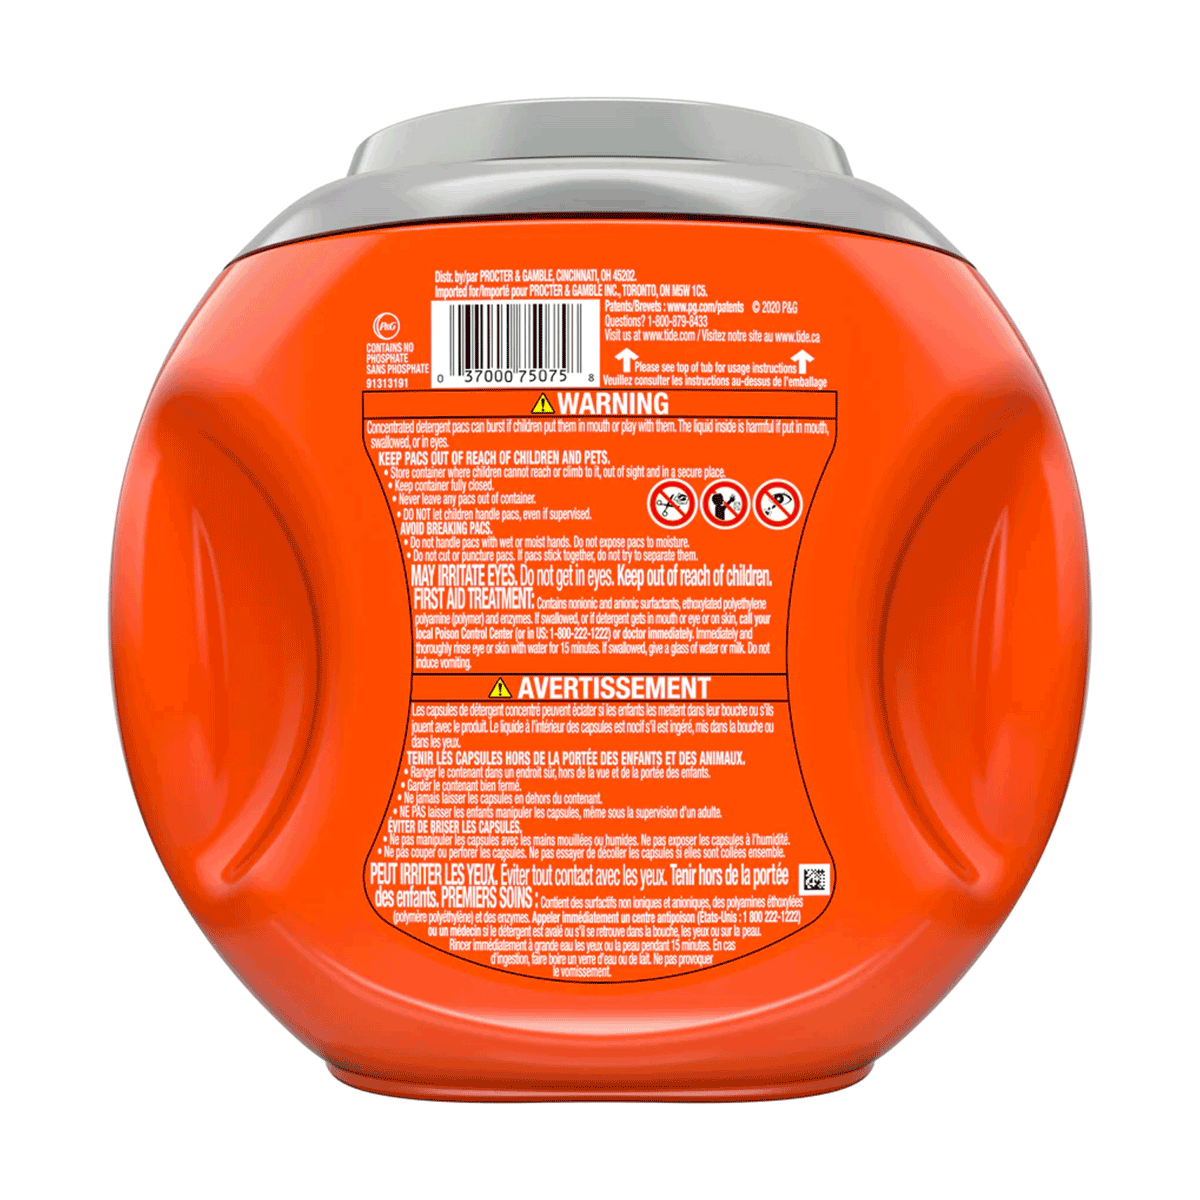 Detergente para ropa en cápsulas Tide PODS Ultra Oxi 4 en 1 (43 unidades)